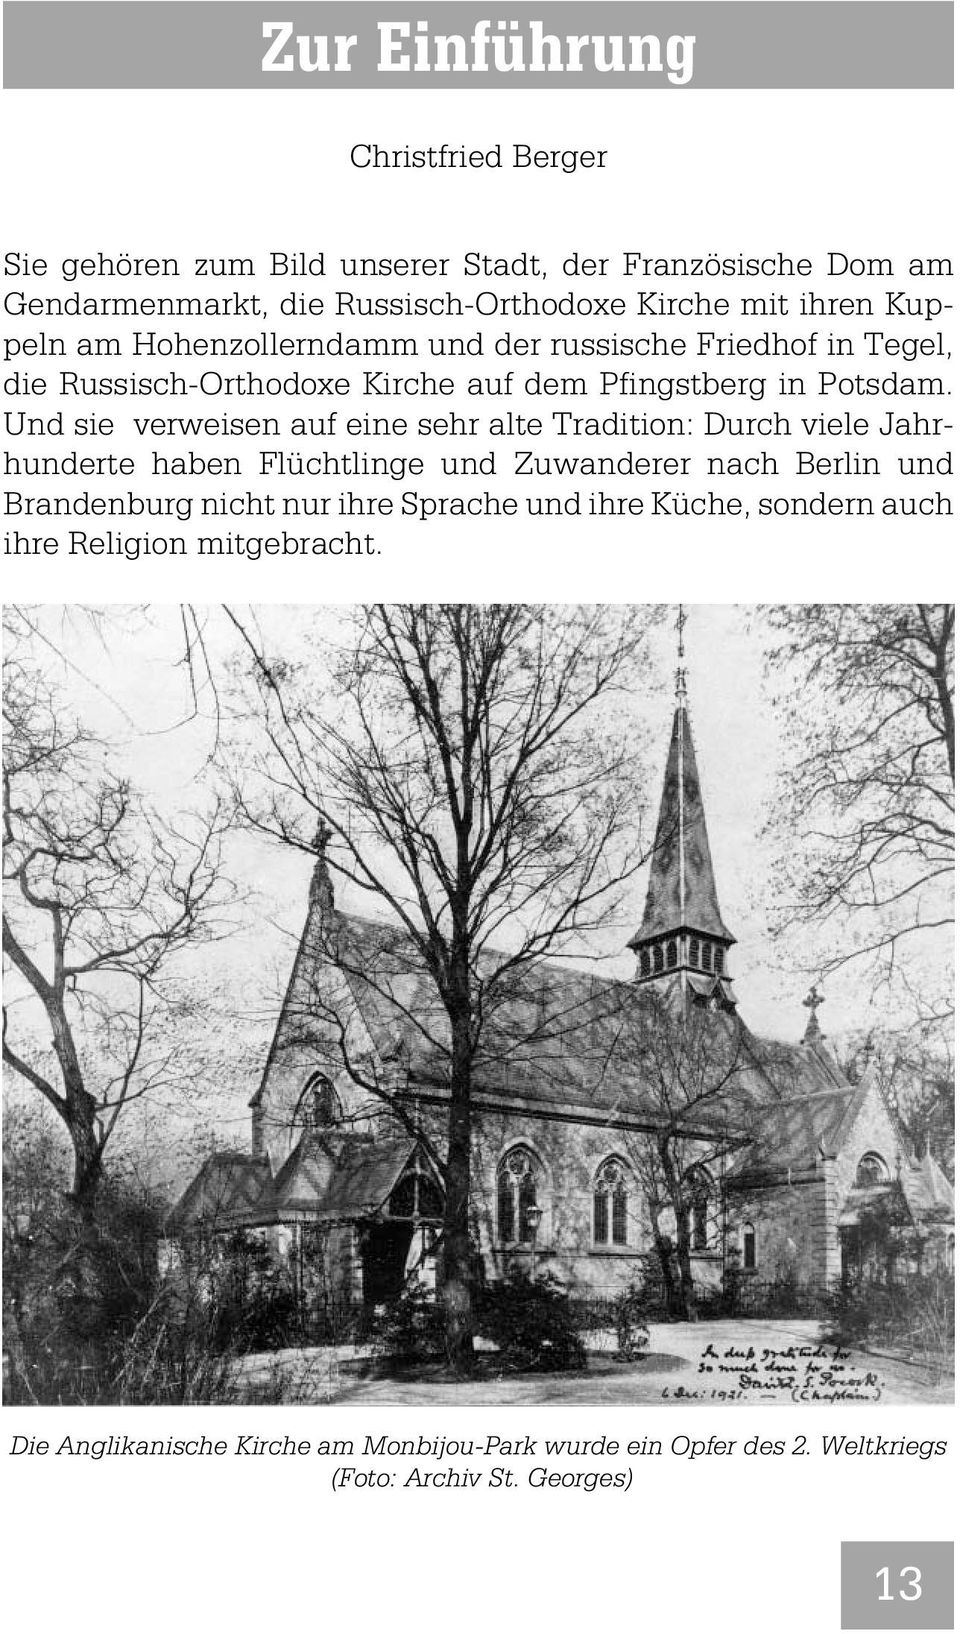 Kirche berlin orthodoxe rumänisch Metropolie